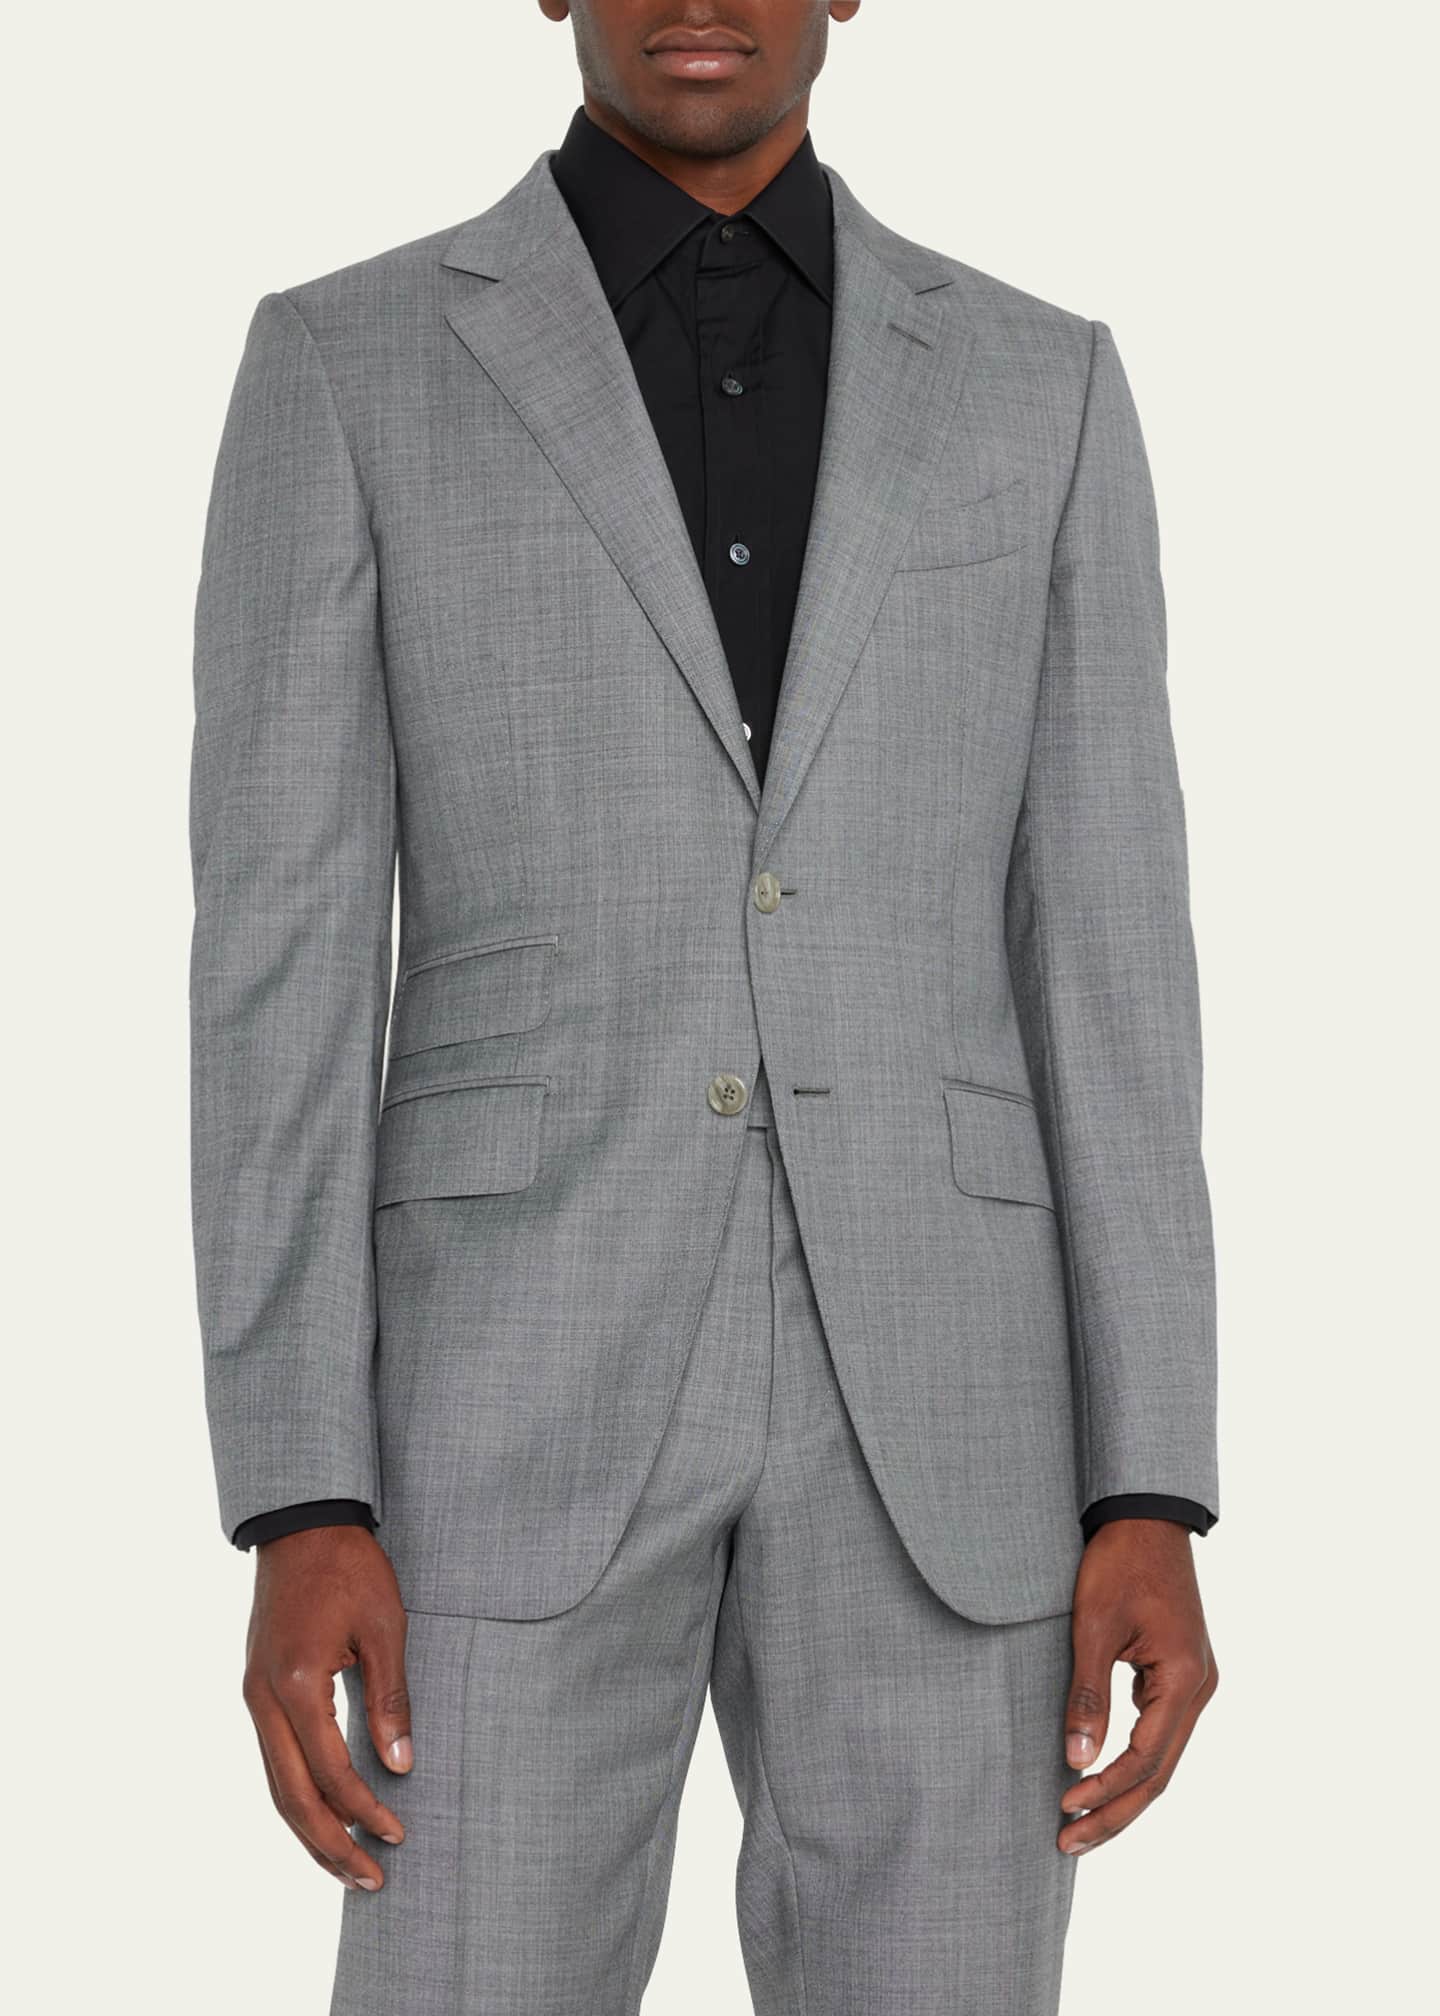 TOM FORD Men's O'Connor Sharkskin Suit - Bergdorf Goodman